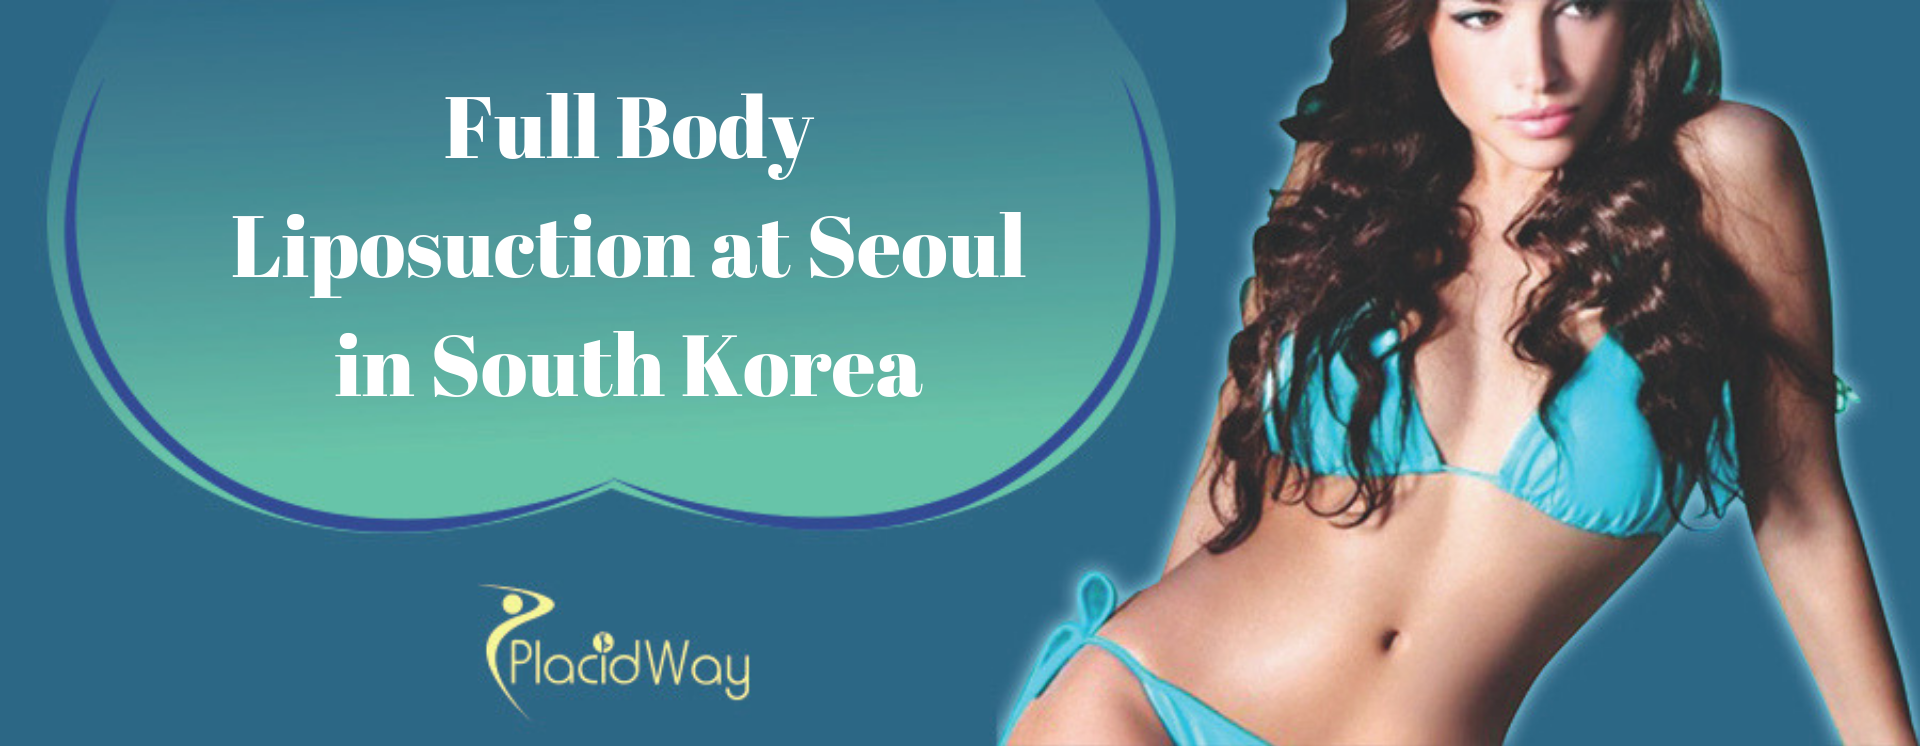 Effective Full Body Liposuction at Seoul in South Korea